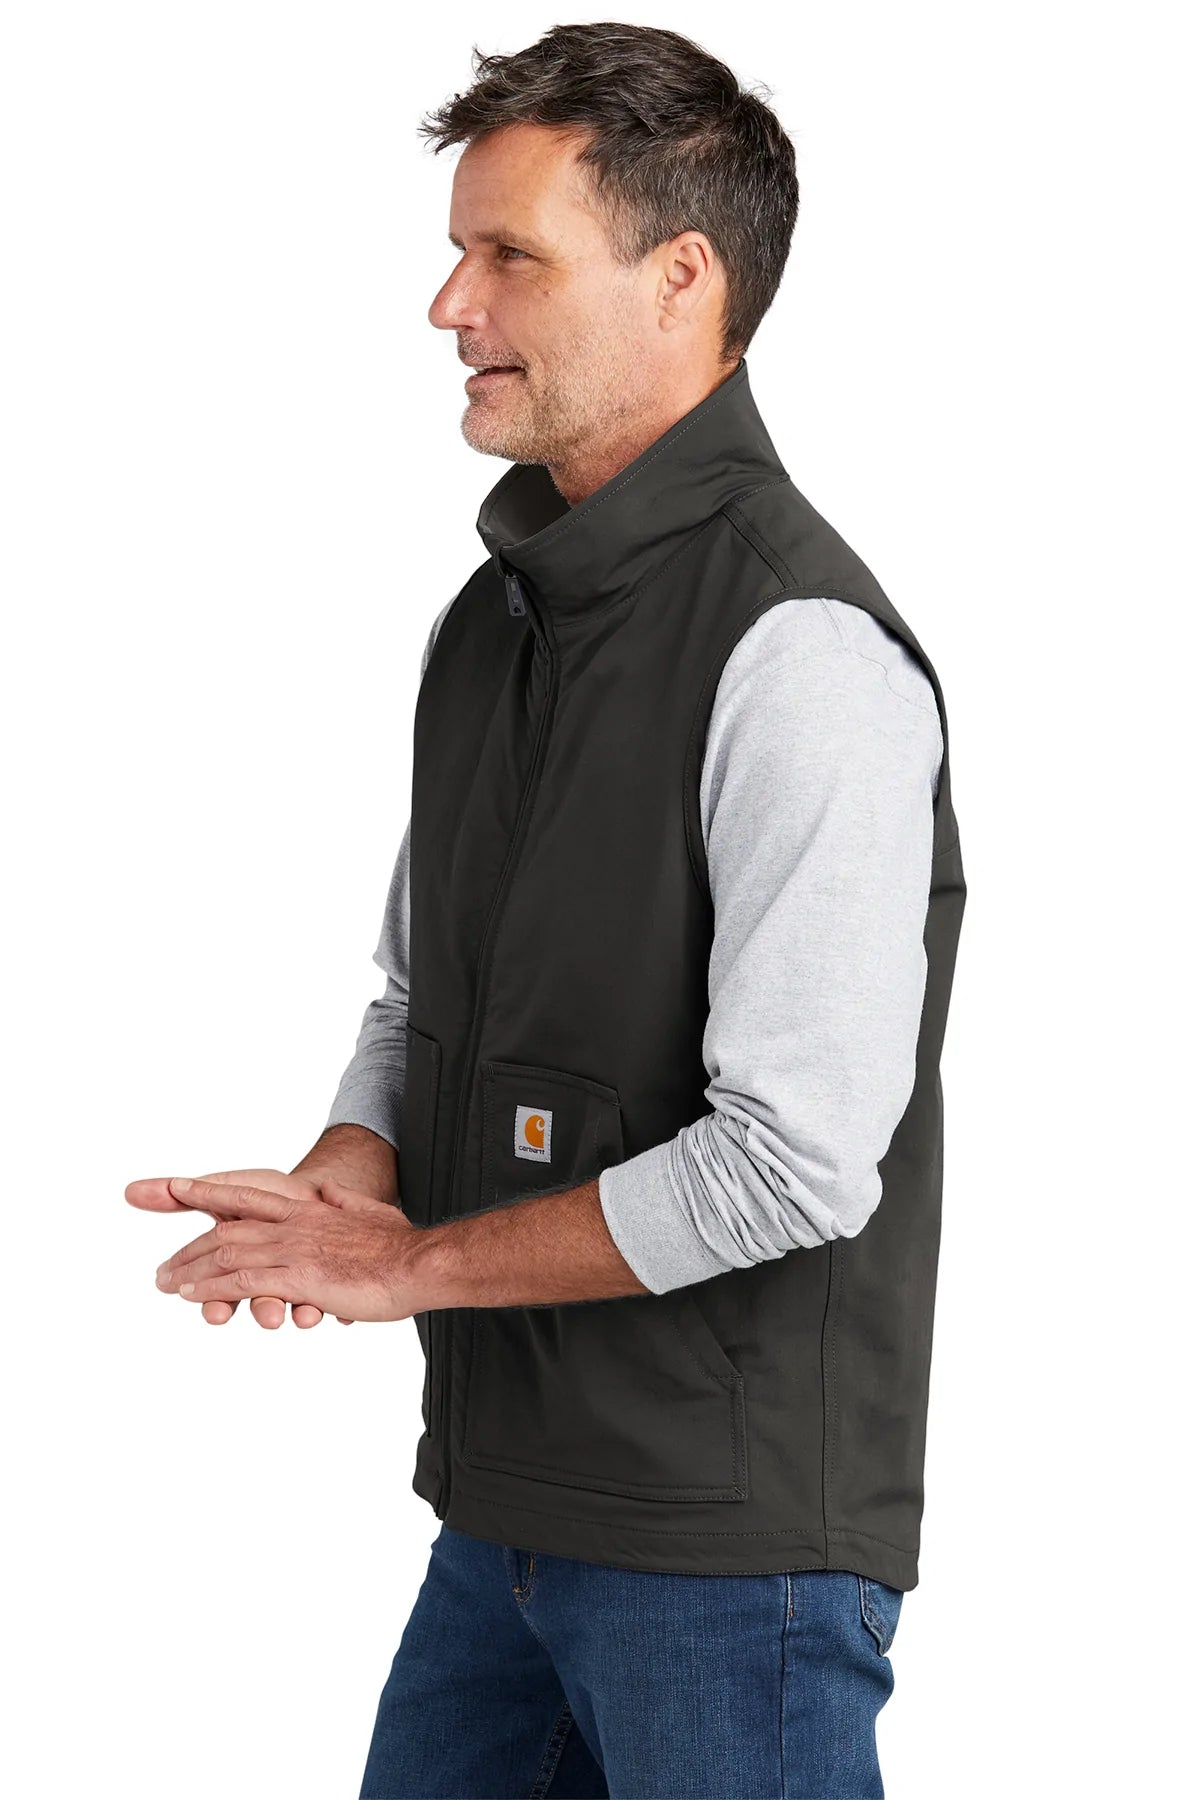 Carhartt Super Dux Soft Shell Customized Vests, Gravel